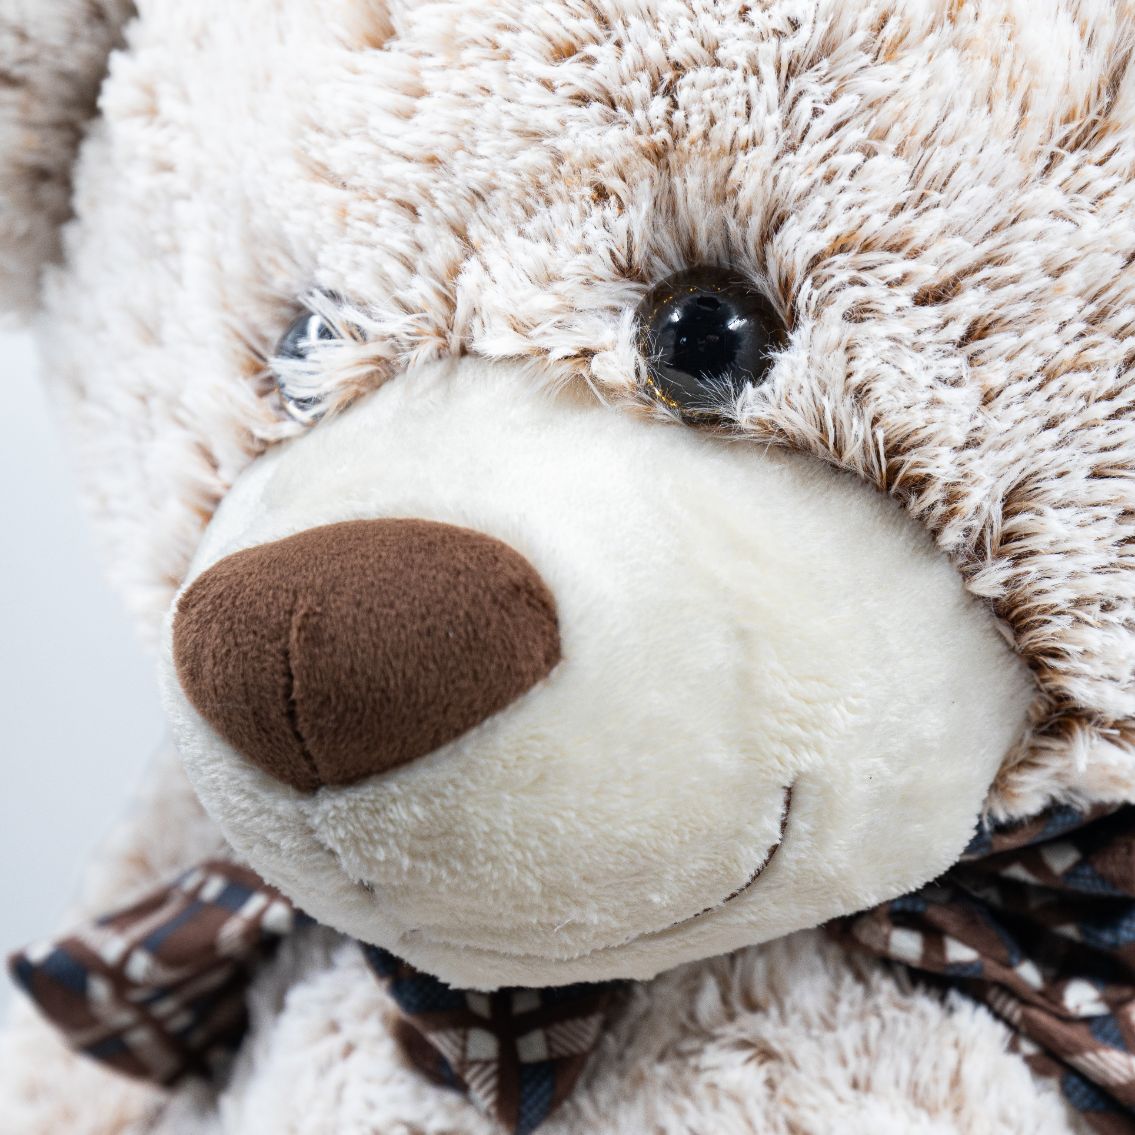 Teddytime Aspen Bear Soft Toy 90cm